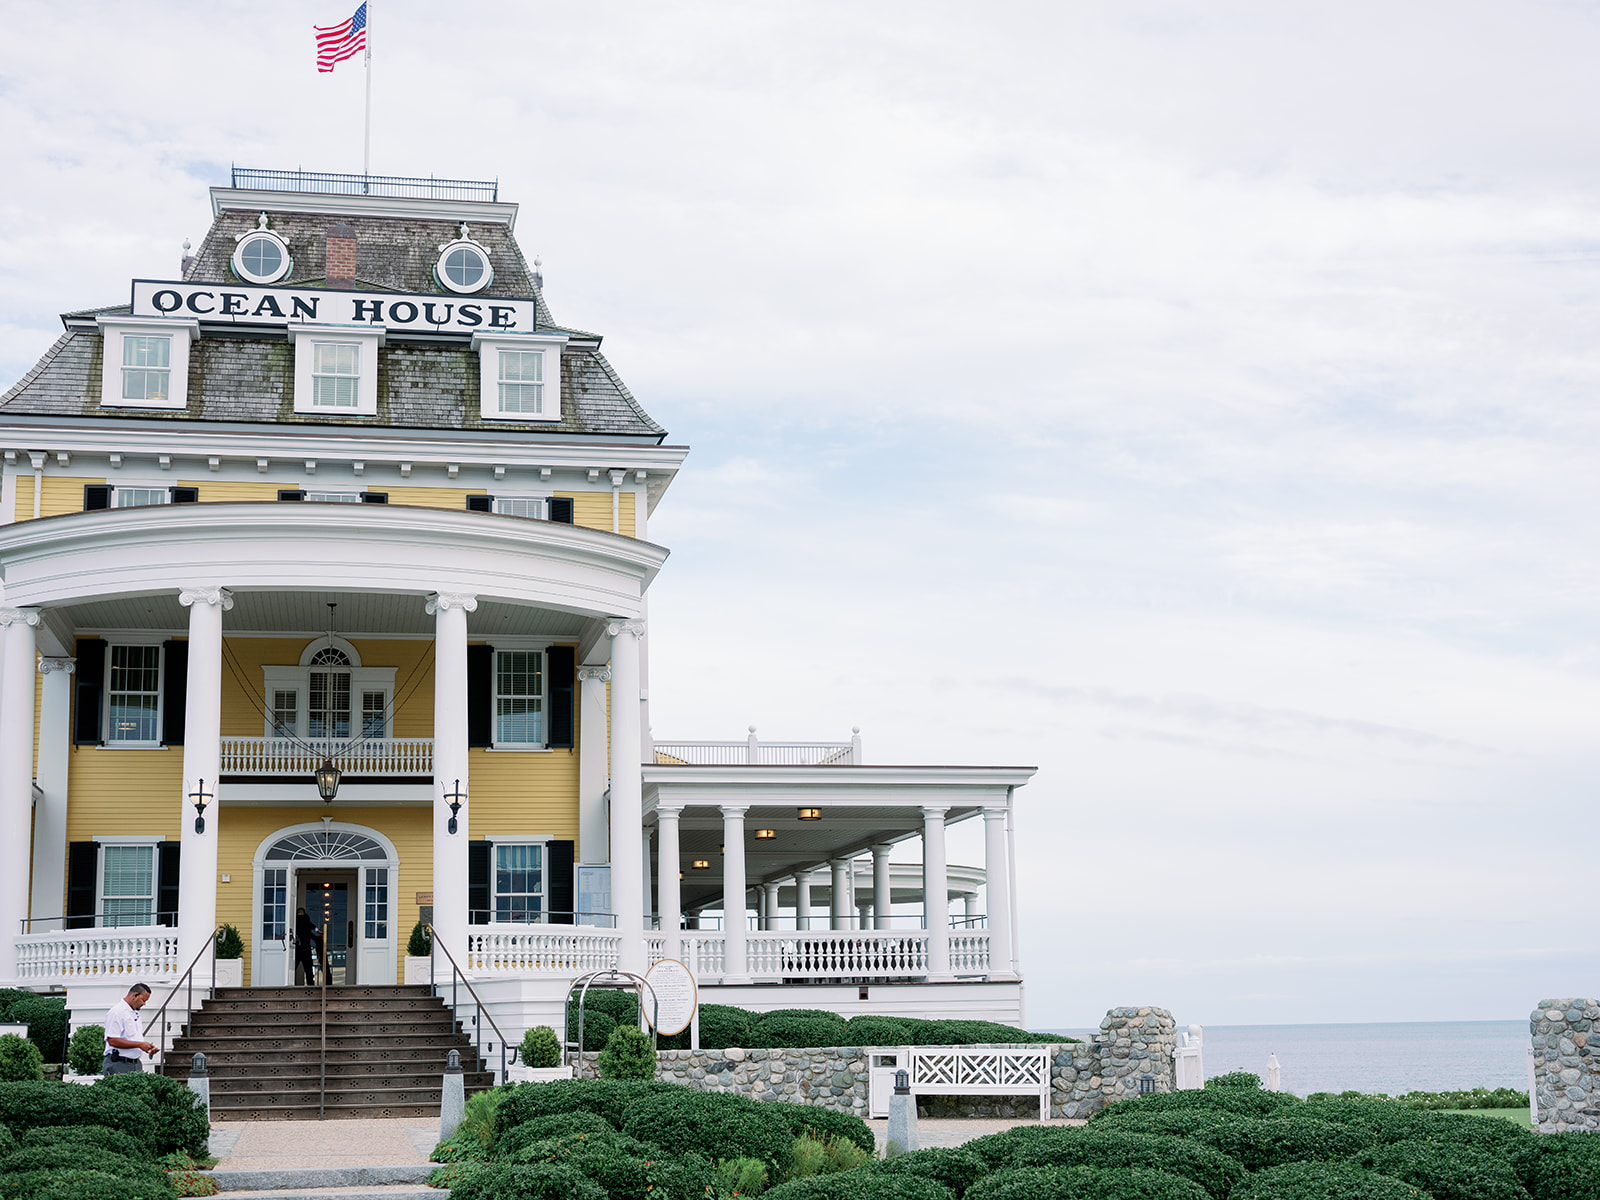 Iconic seaside New England resort and destination wedding venue, Ocean House in Rhode Island.